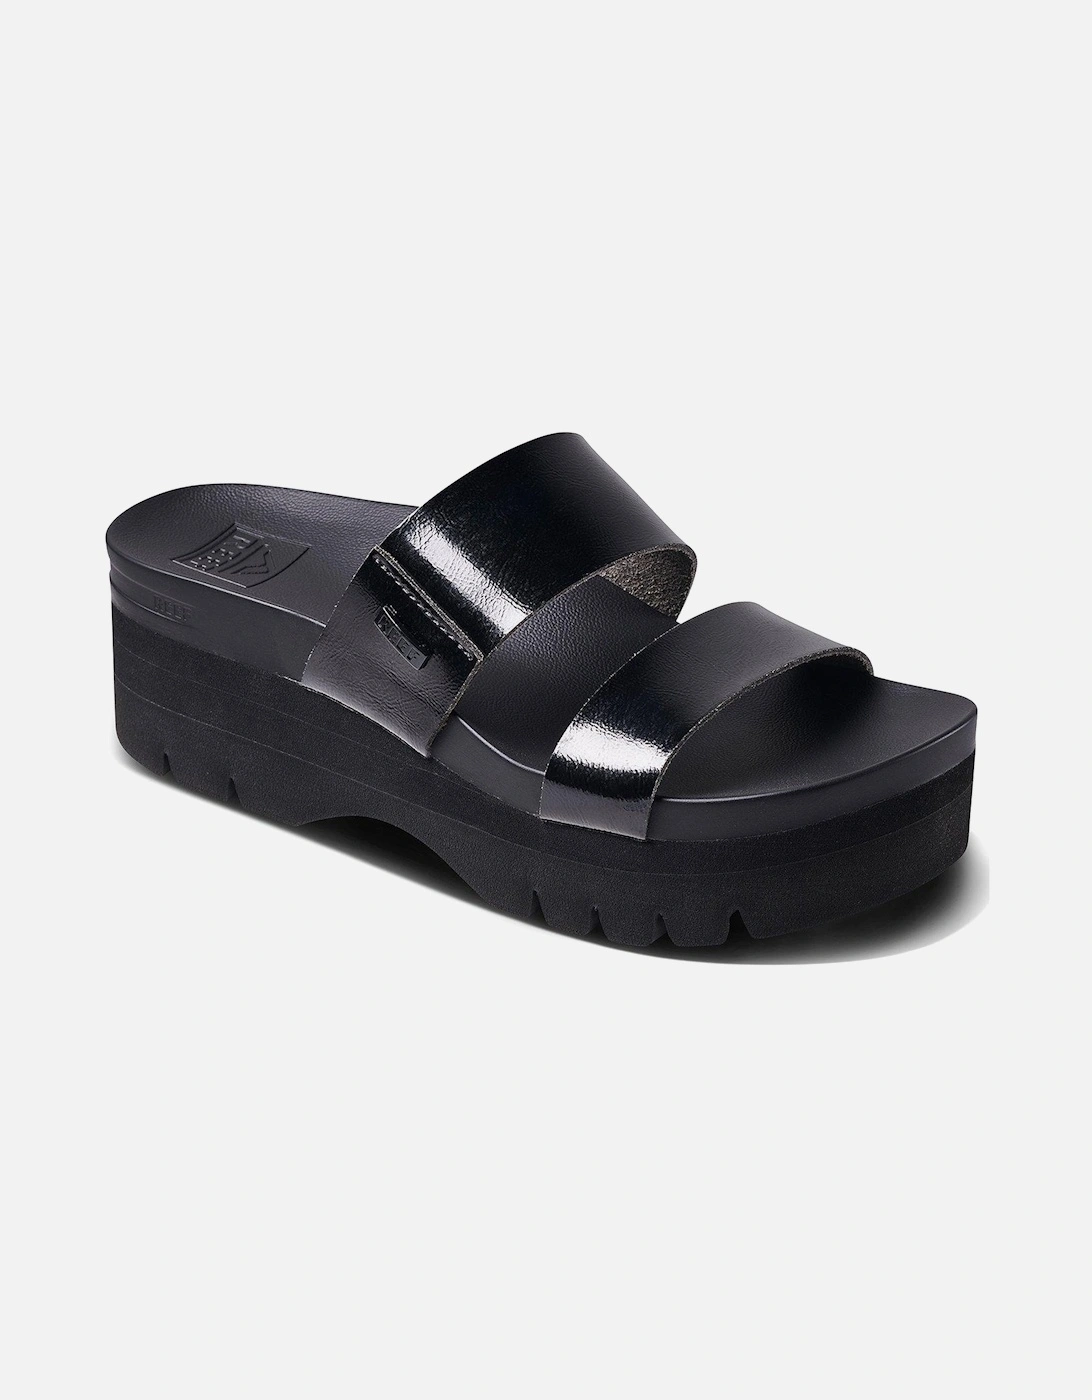 Cushion Vista Higher Wedged Sandals - Black, 2 of 1